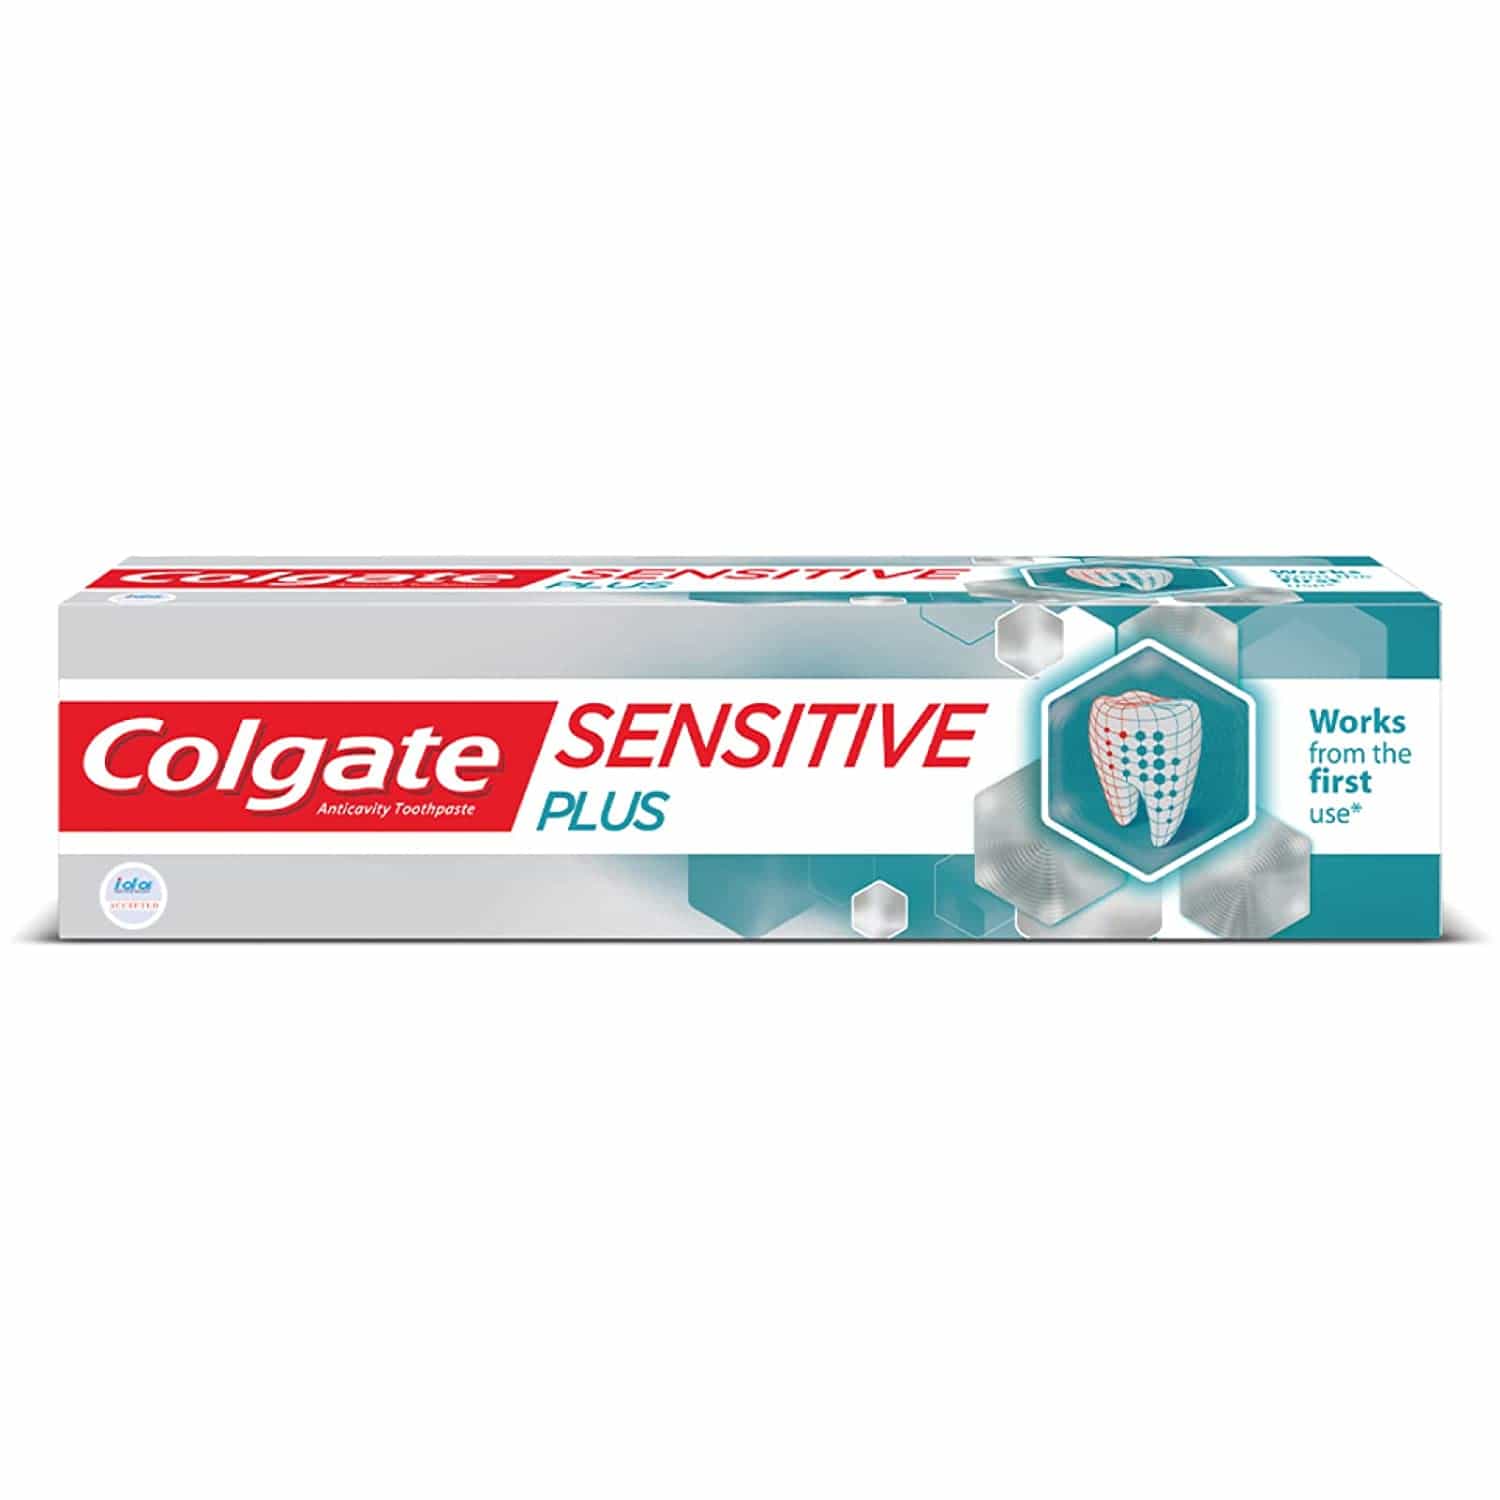 Colgate Sensitive Plus toothpaste